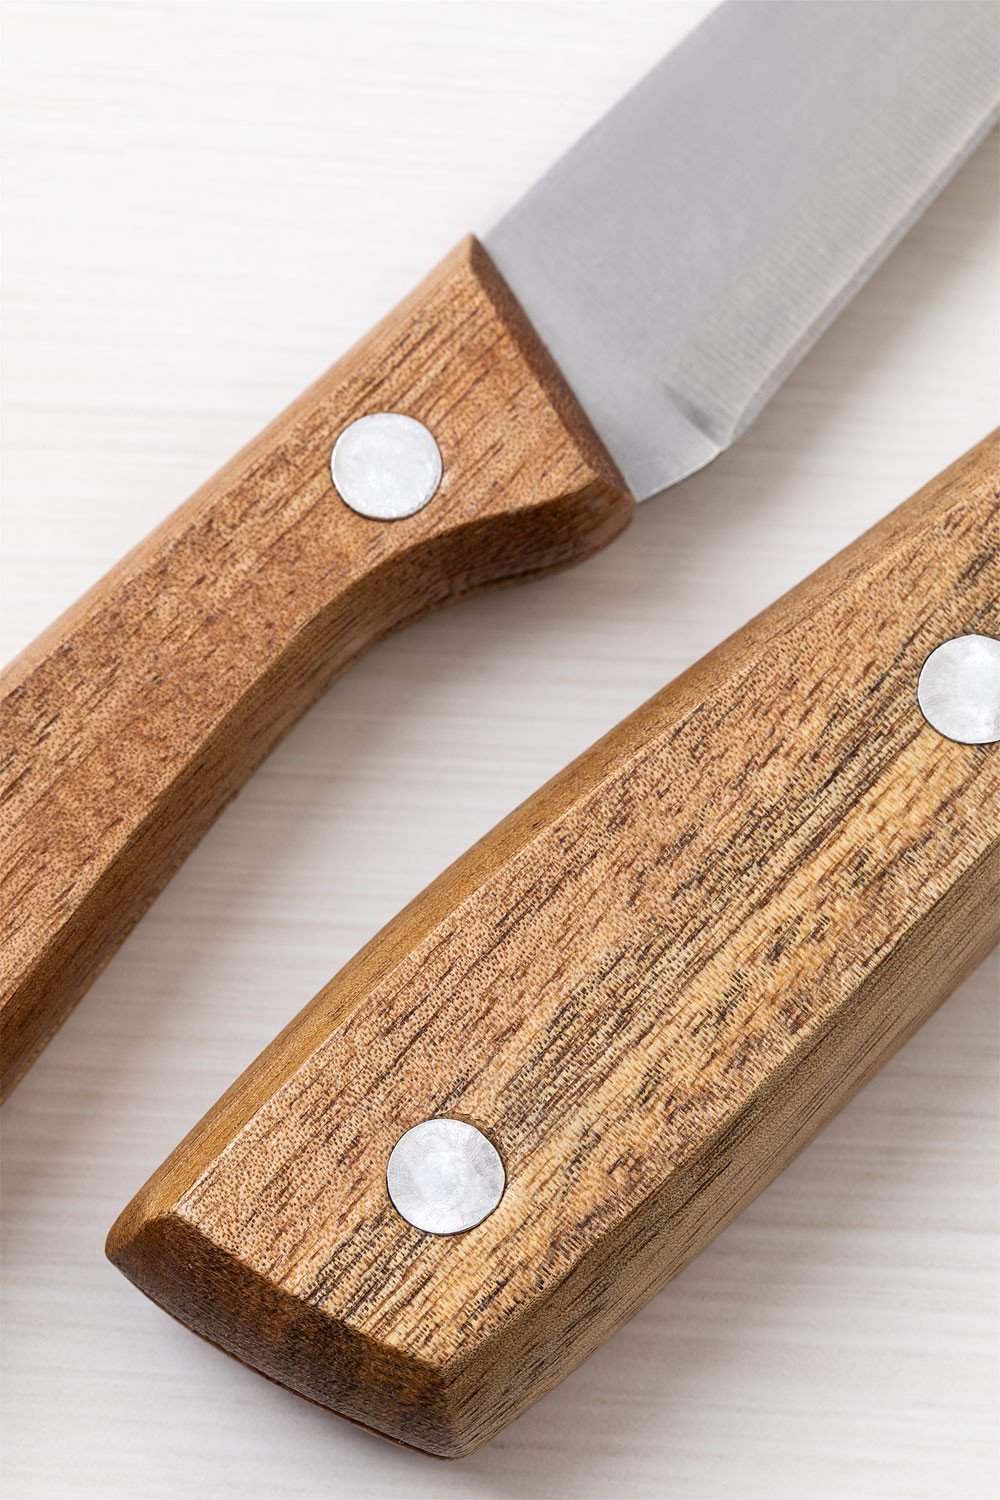 https://cdn.sklum.com/ie/wk/1590559/set-of-kitchen-knives-with-wooden-block-espe.jpg?cf-resize=gallery